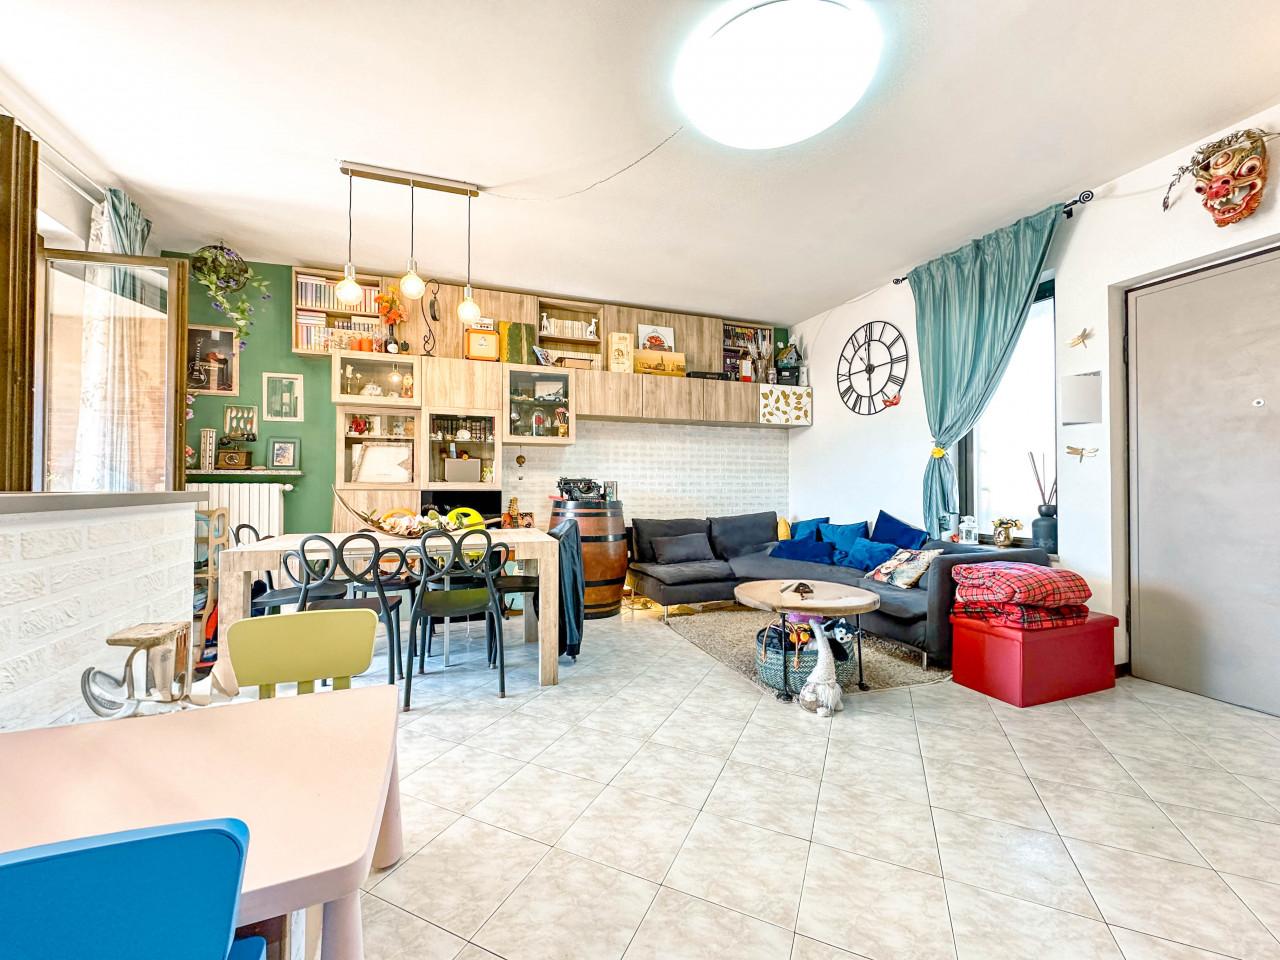 Appartamento in vendita a Gattinara